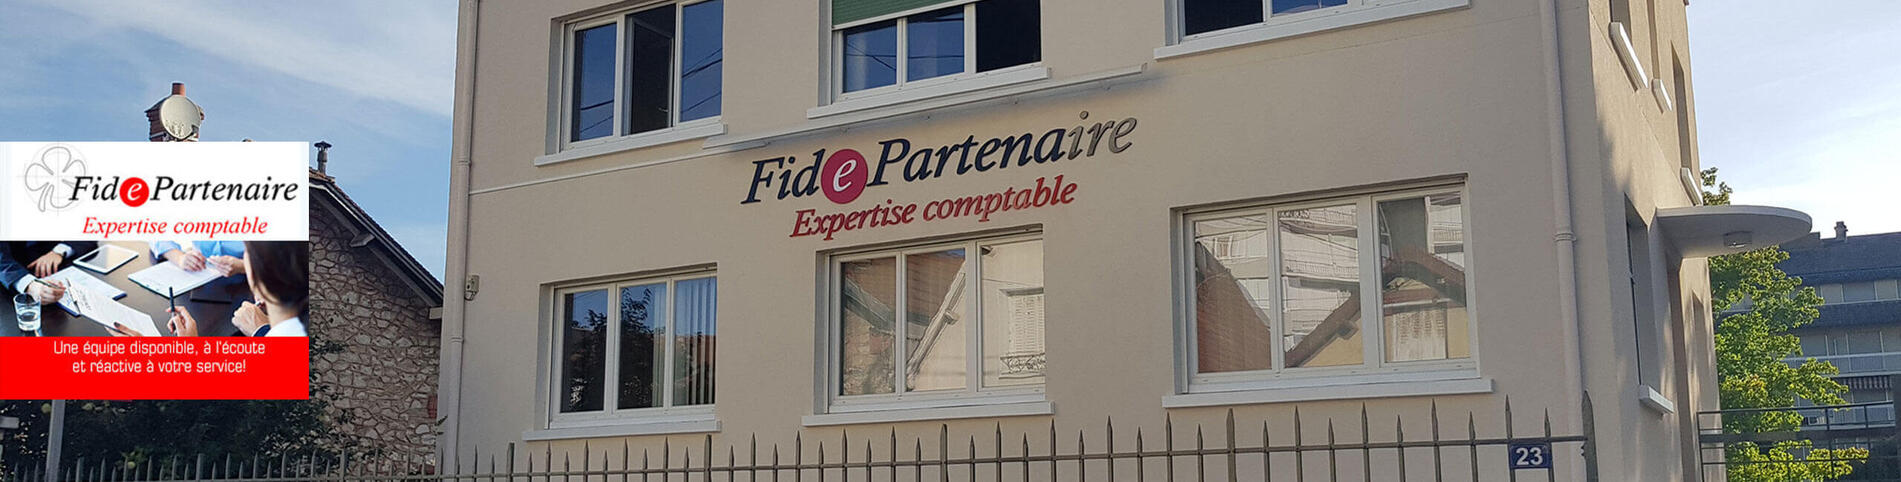 FidePartenaire Expertise comptable